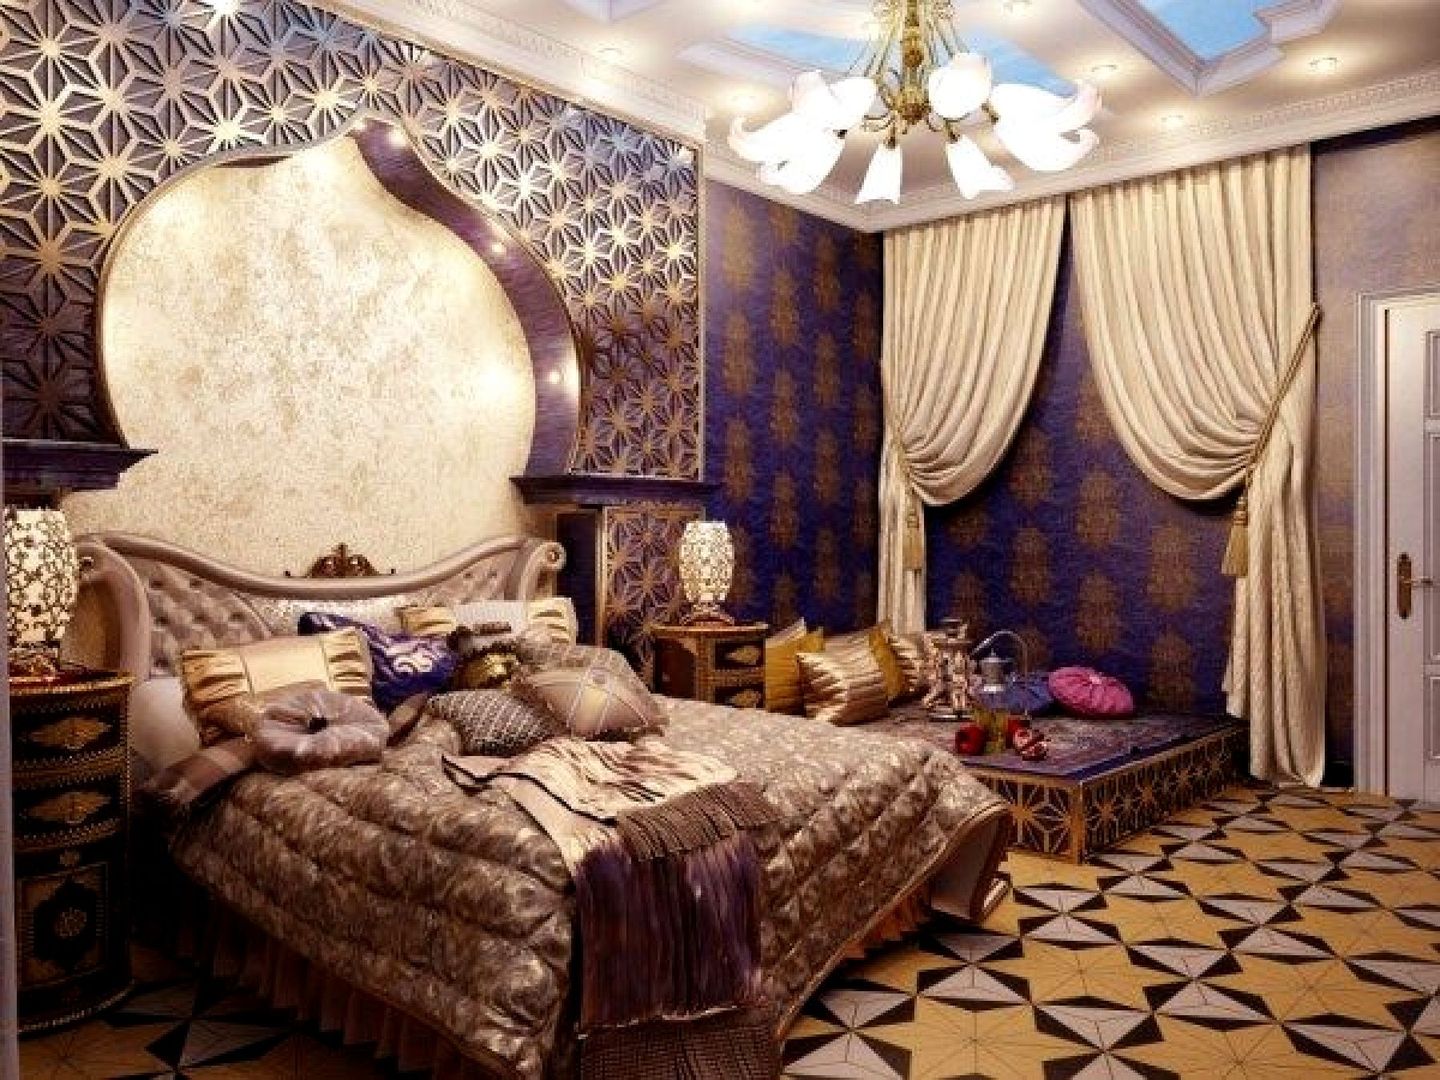 Kamar tidur mewah modern tema Arabian classic cocok untuk yang ingin suasana kamar tidur ala Arab.